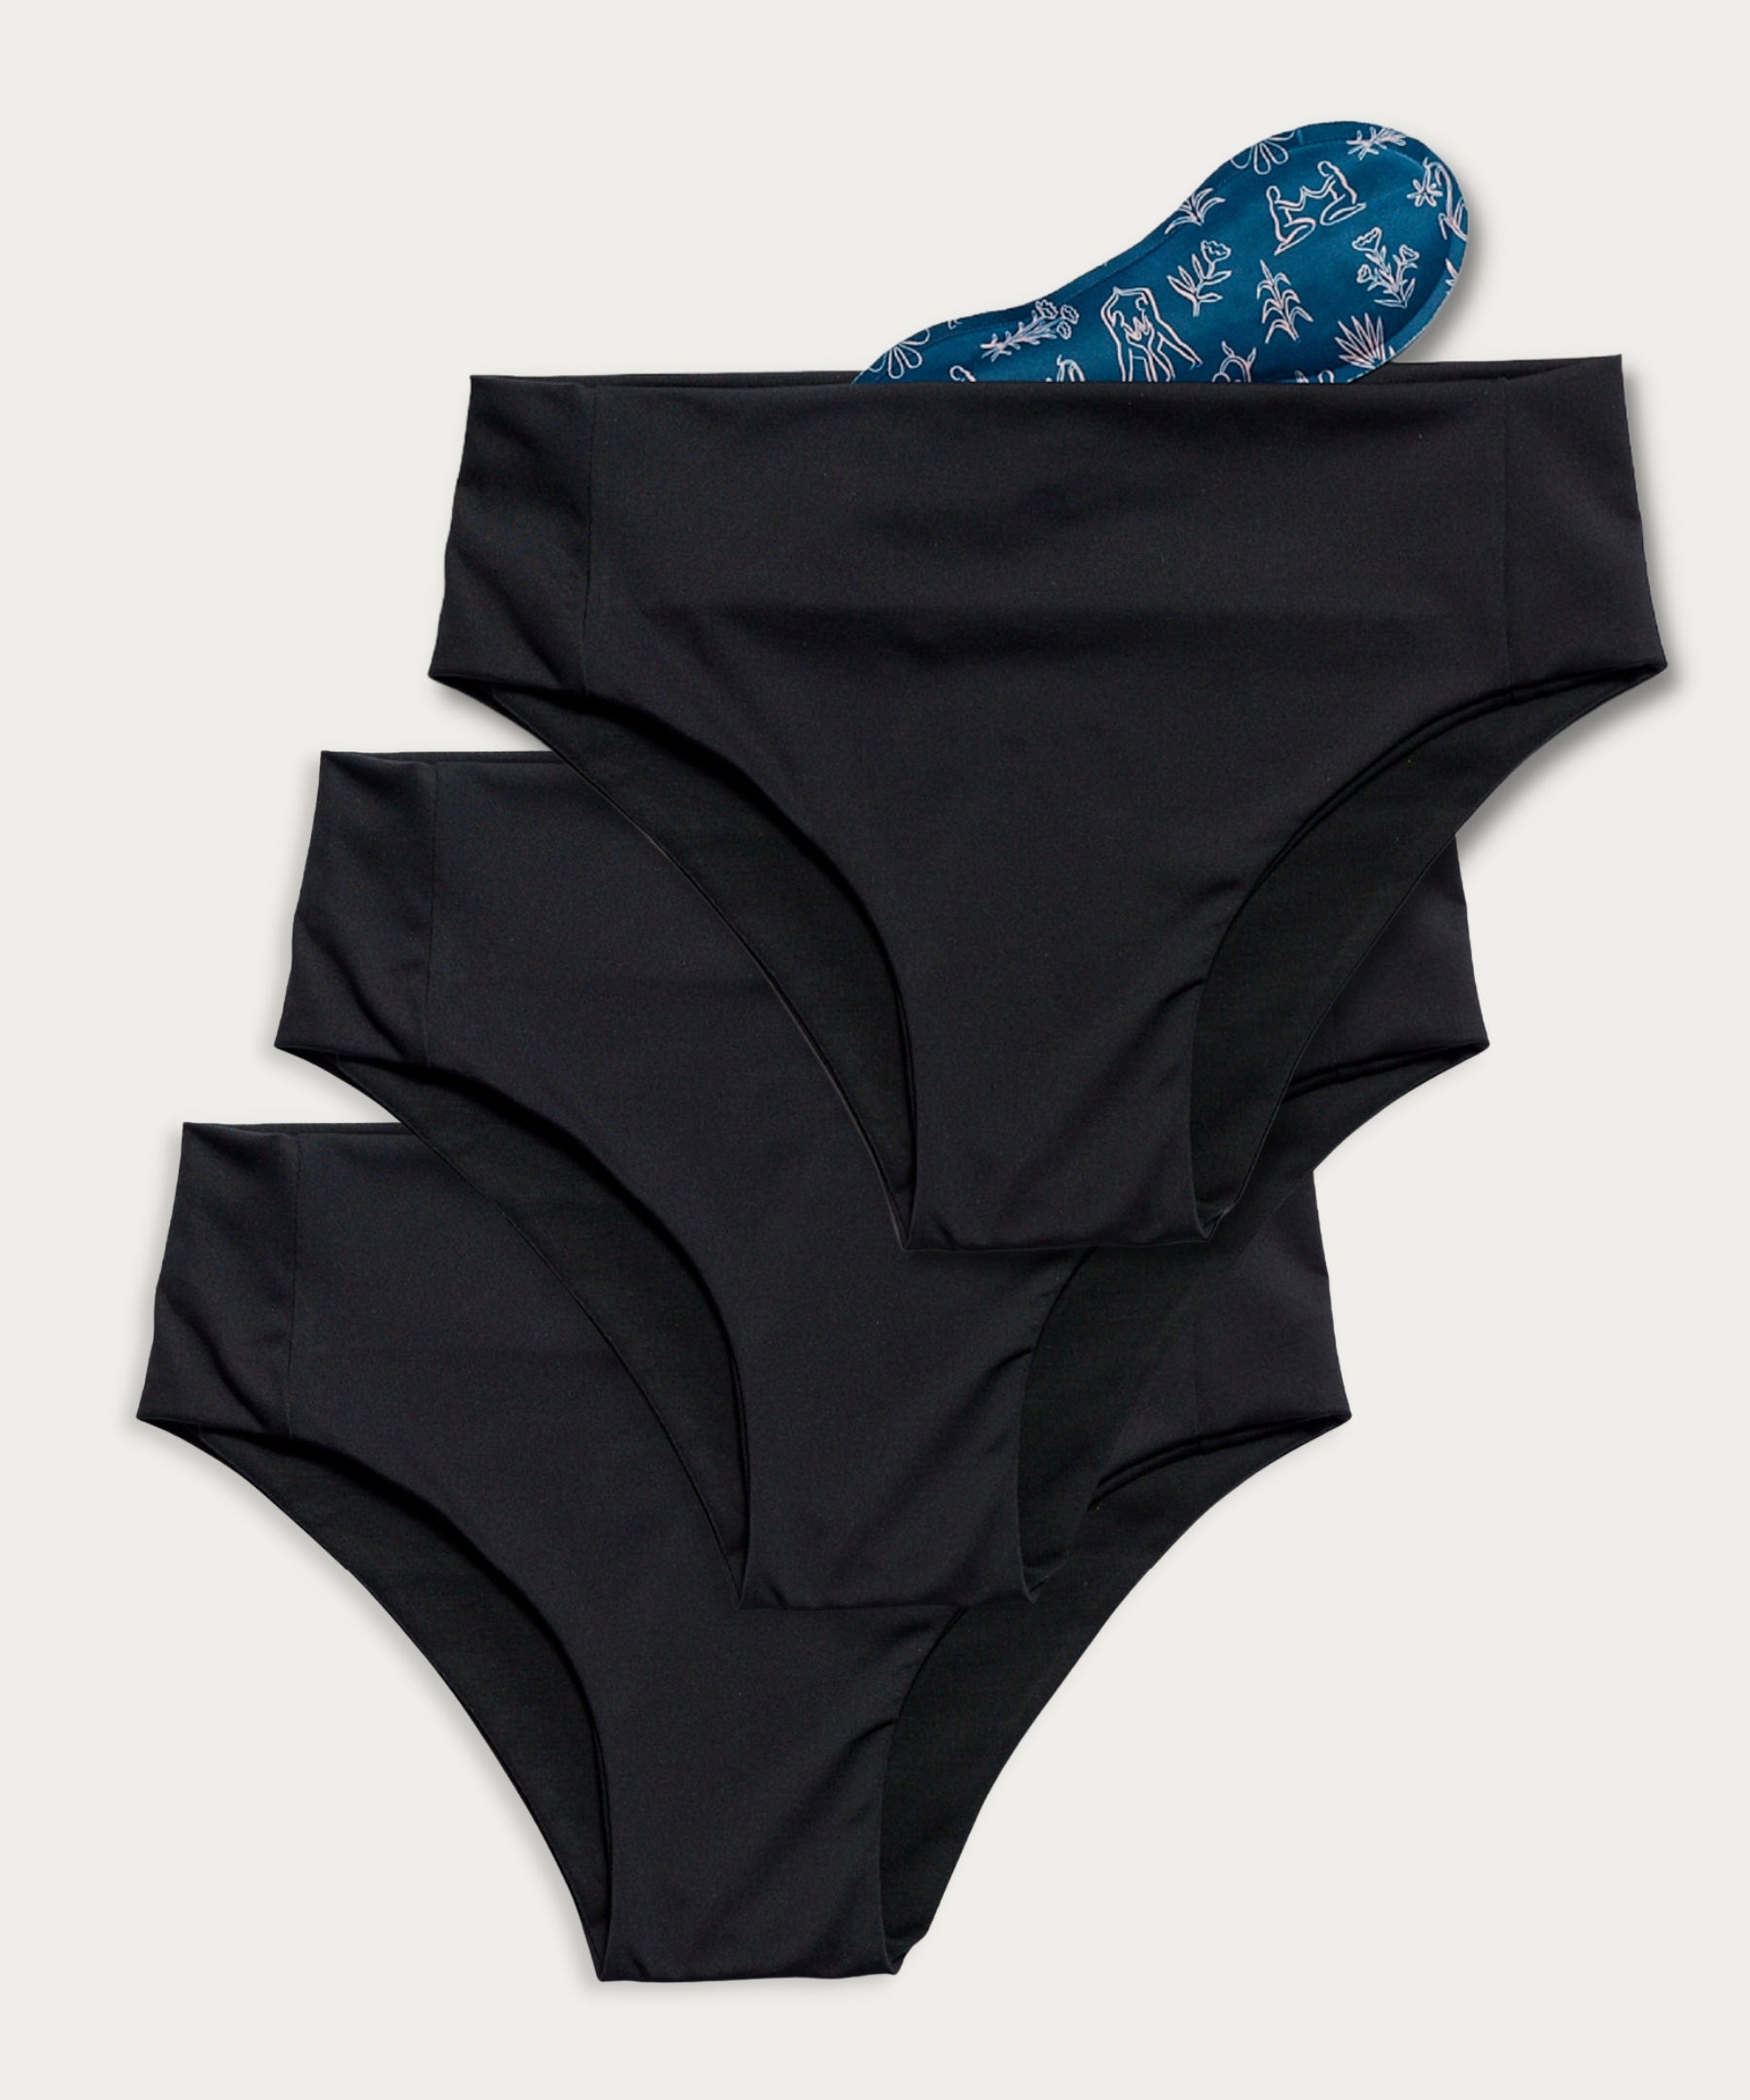 twifer panties for women 4 pieces high waist leakproof underwear